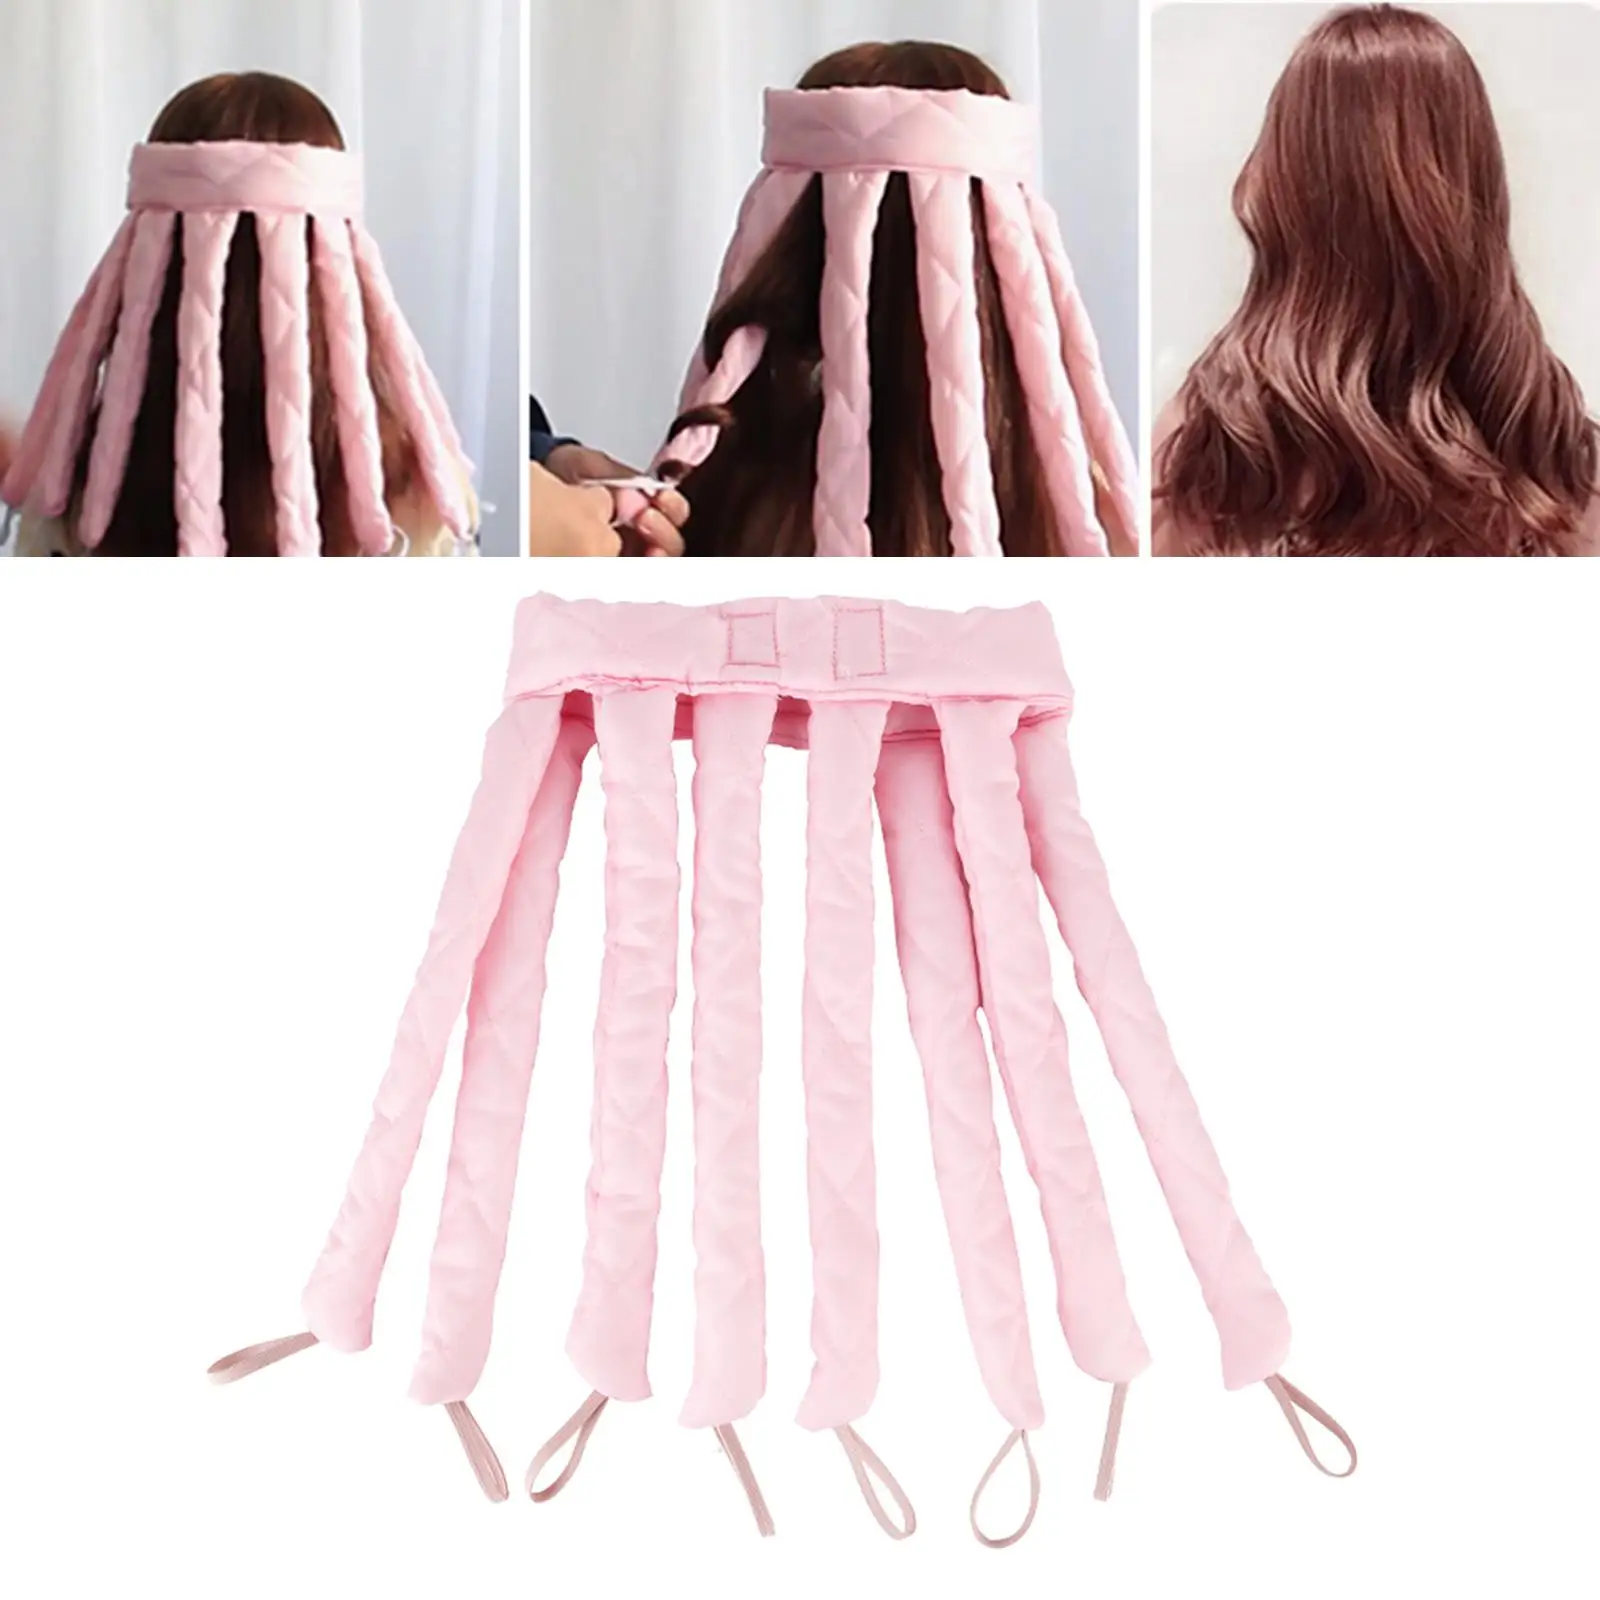 Design Heatless Hair Curlers Wave Hair Curler Natural Curls Women Girl`S